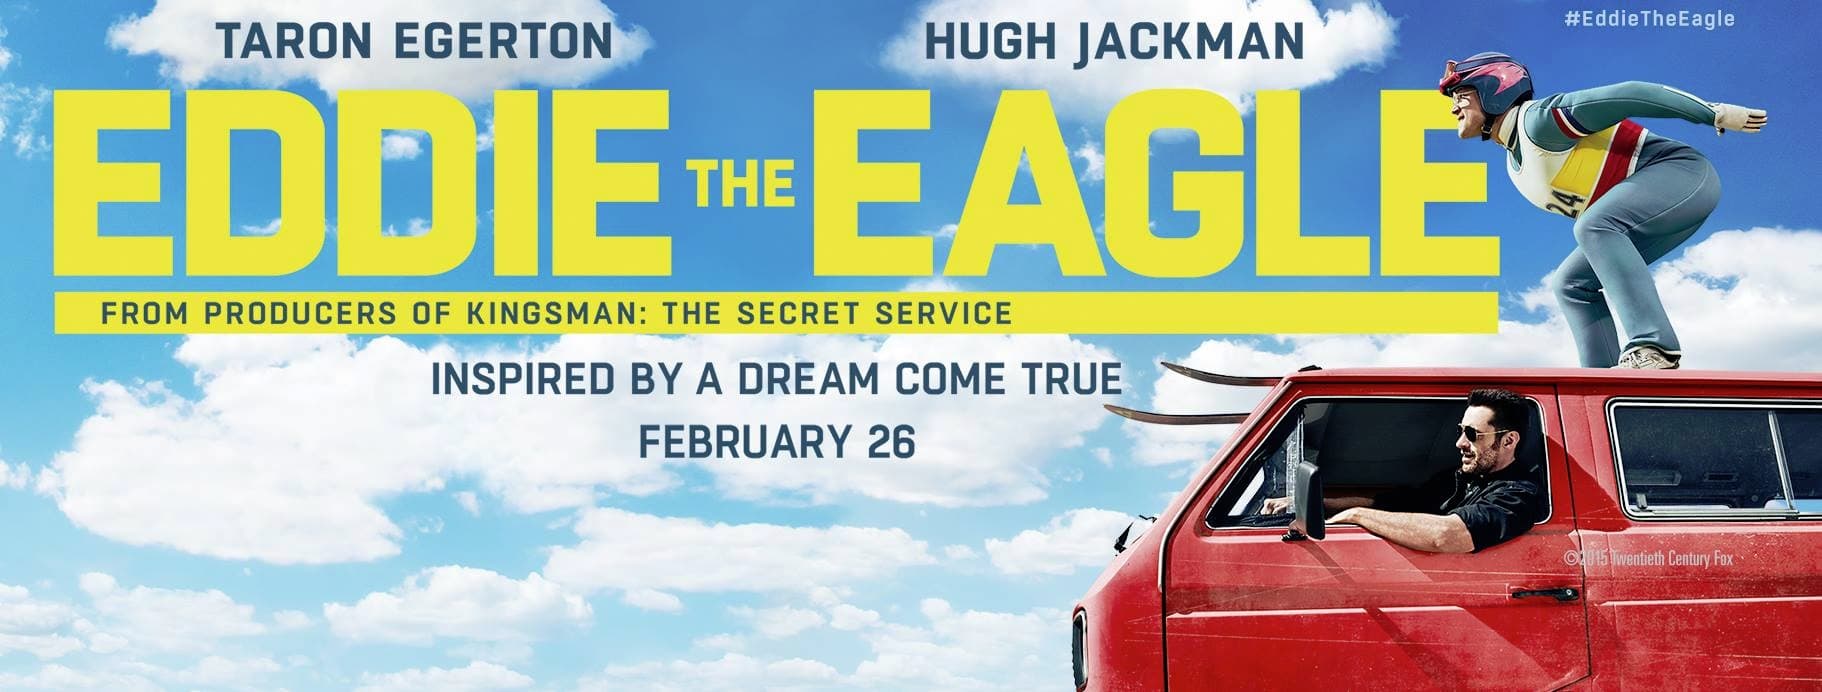 Eddie the Eagle 4K 2016 big poster